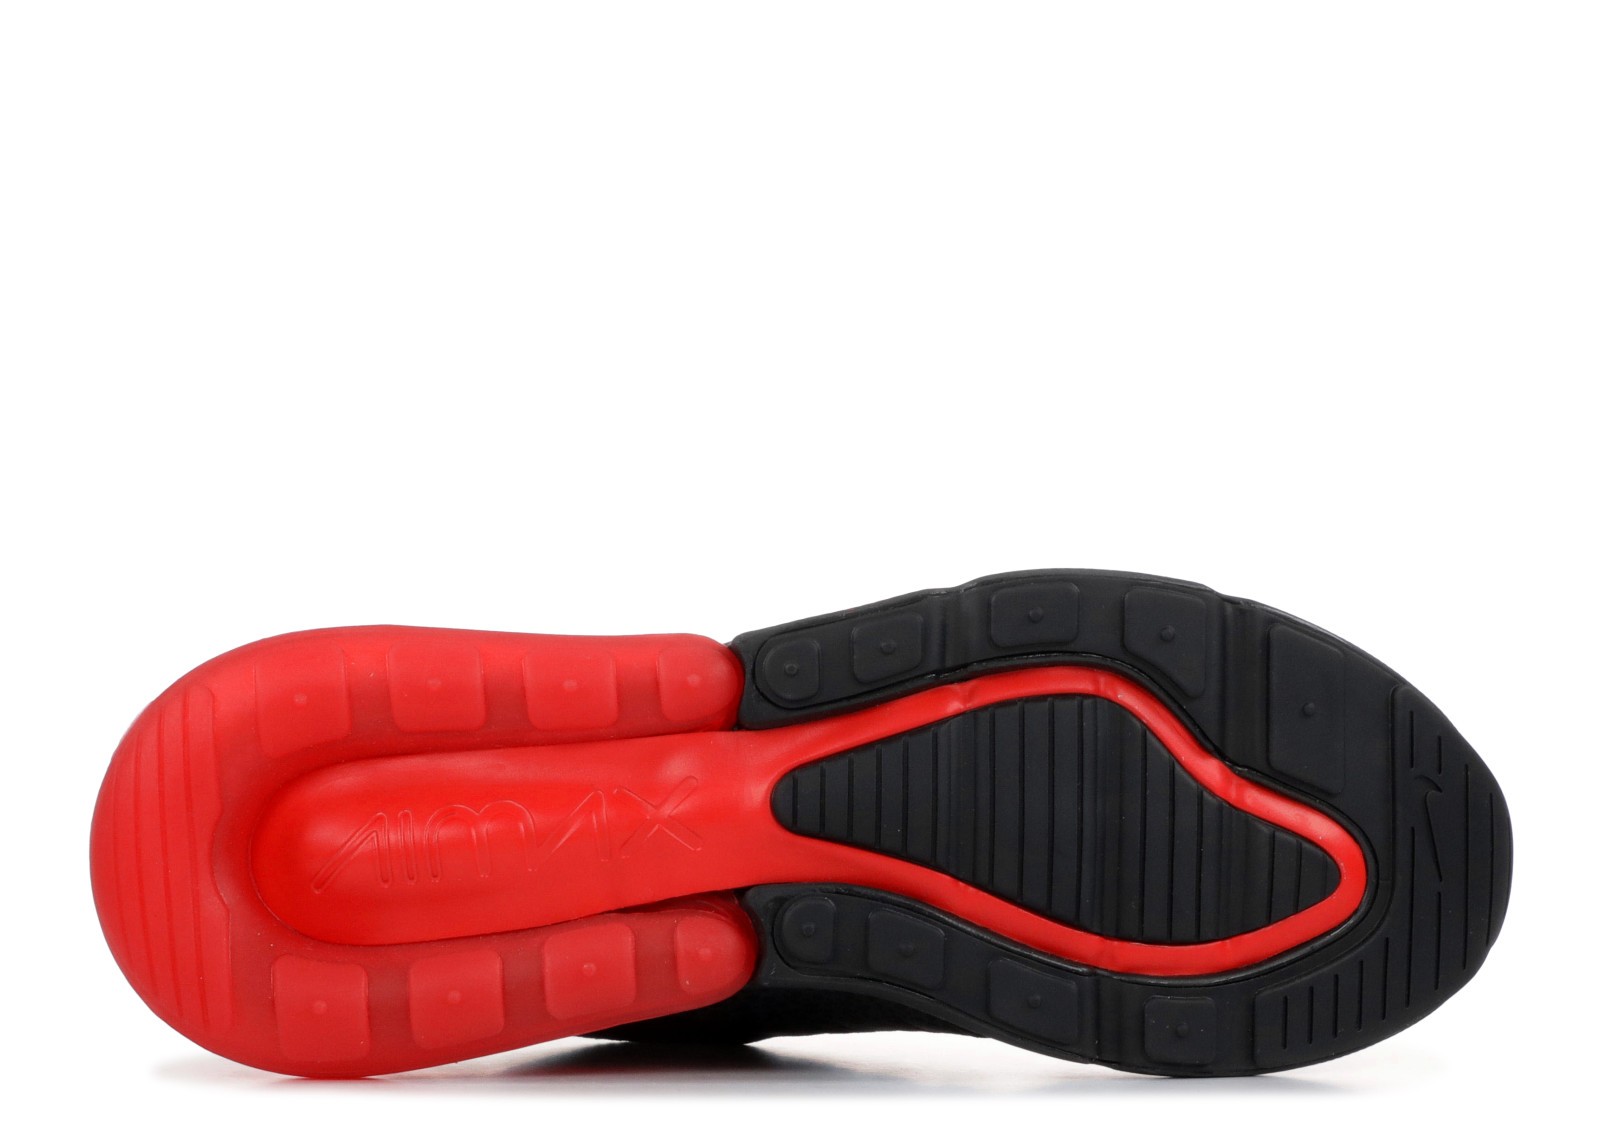 StclaircomoShops 001 - nike air monarch black steel toe sneakers boots - Nike Air Max 270 Black Red BQ6525